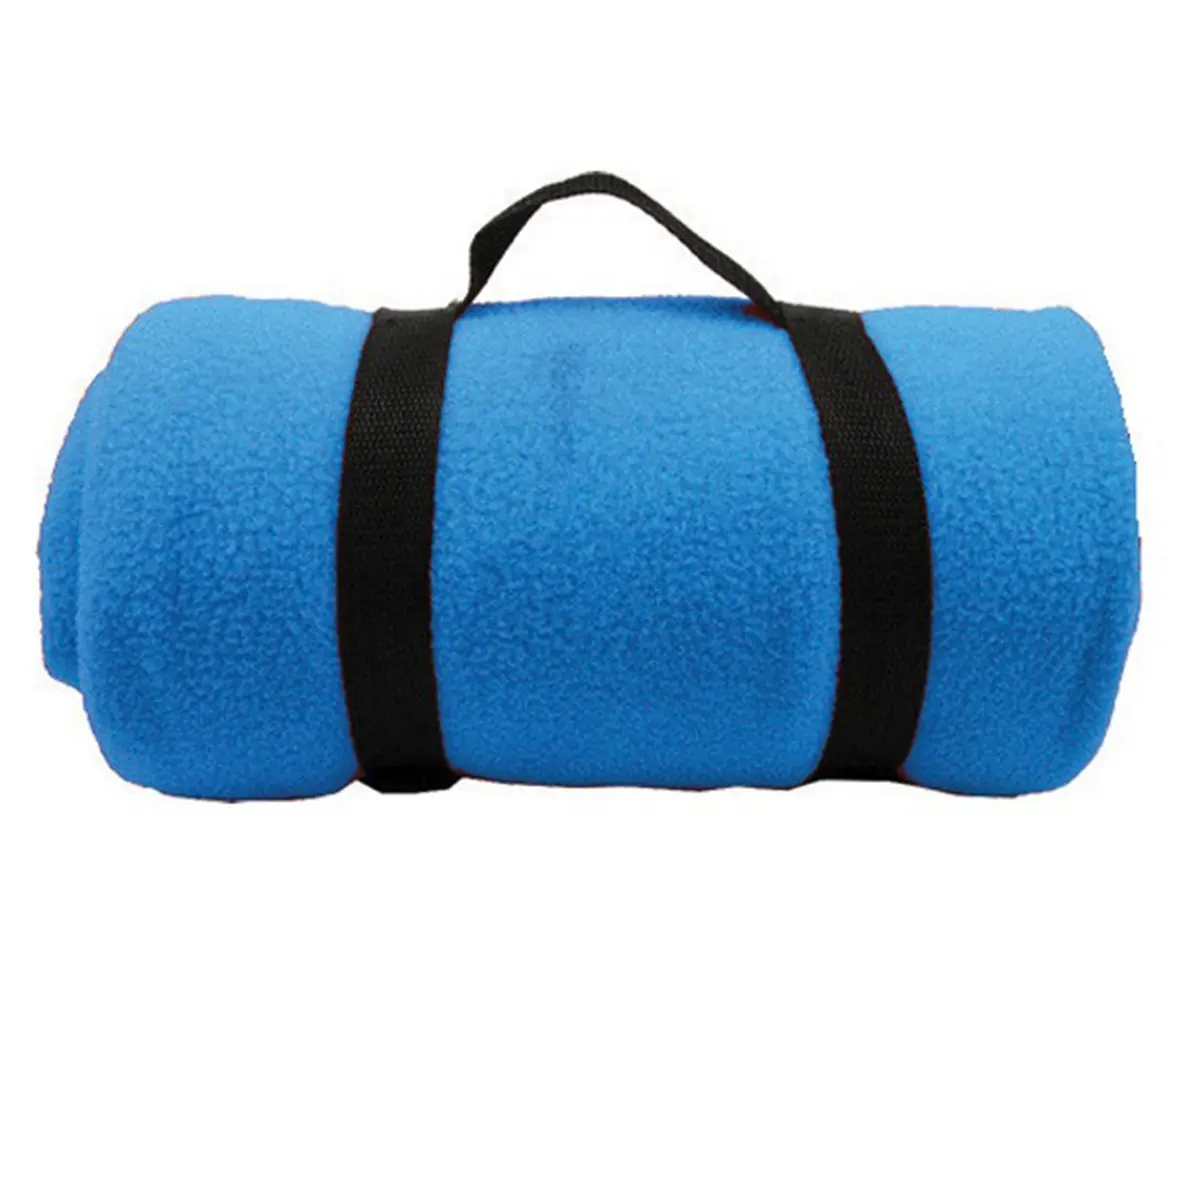 economy factory travel blanket beach fleece throw blanket plaid easy carry handle lightweight wearable to inner sleeping bag